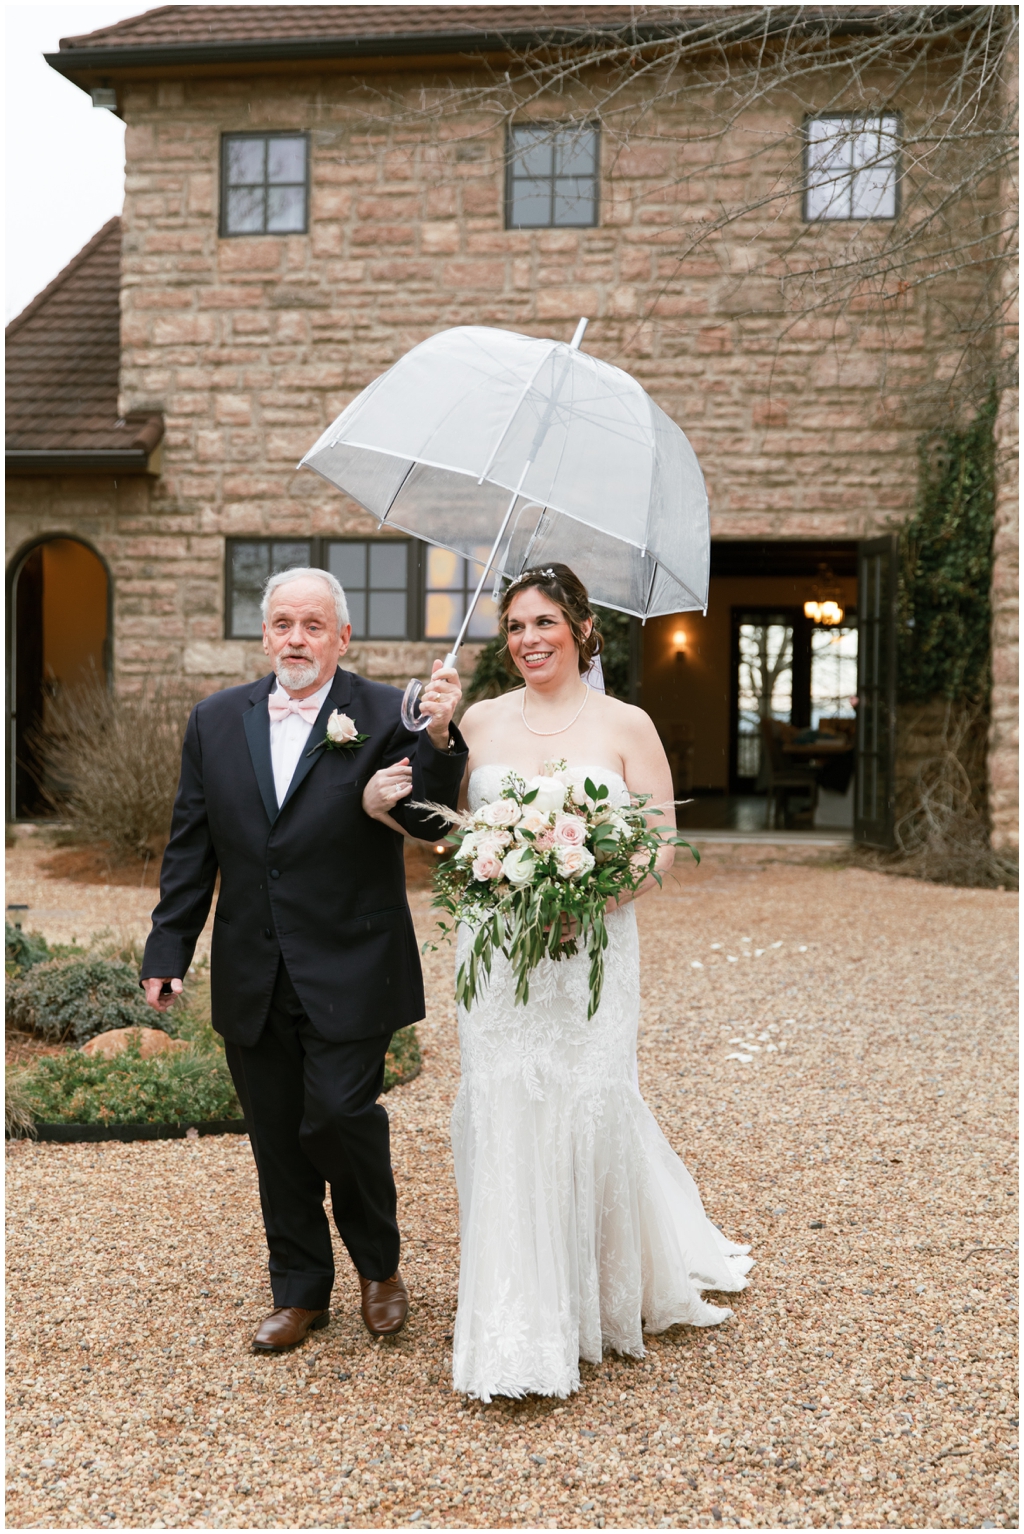 Rainy winter wedding at Chateau Selah. Image by Holly Michon Photography.